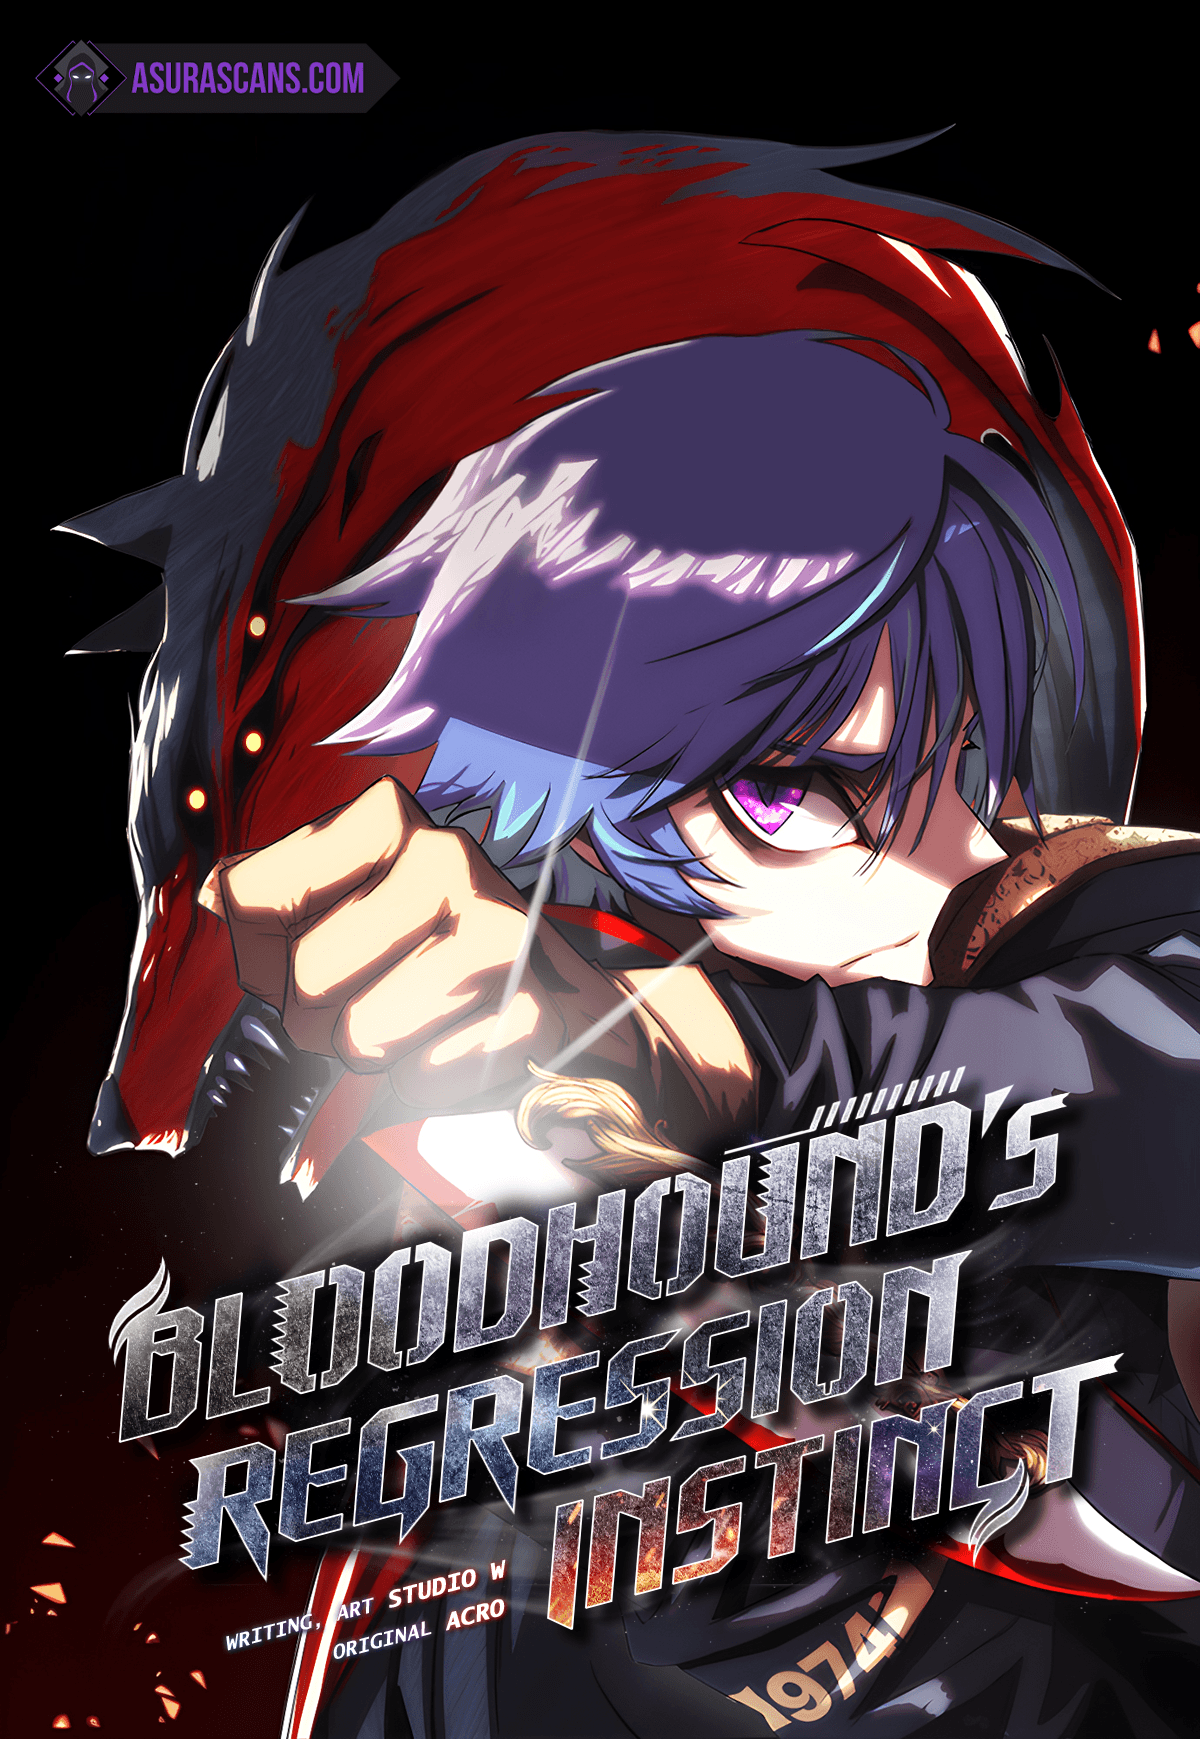 Bloodhound’s Regression Instinct cover image